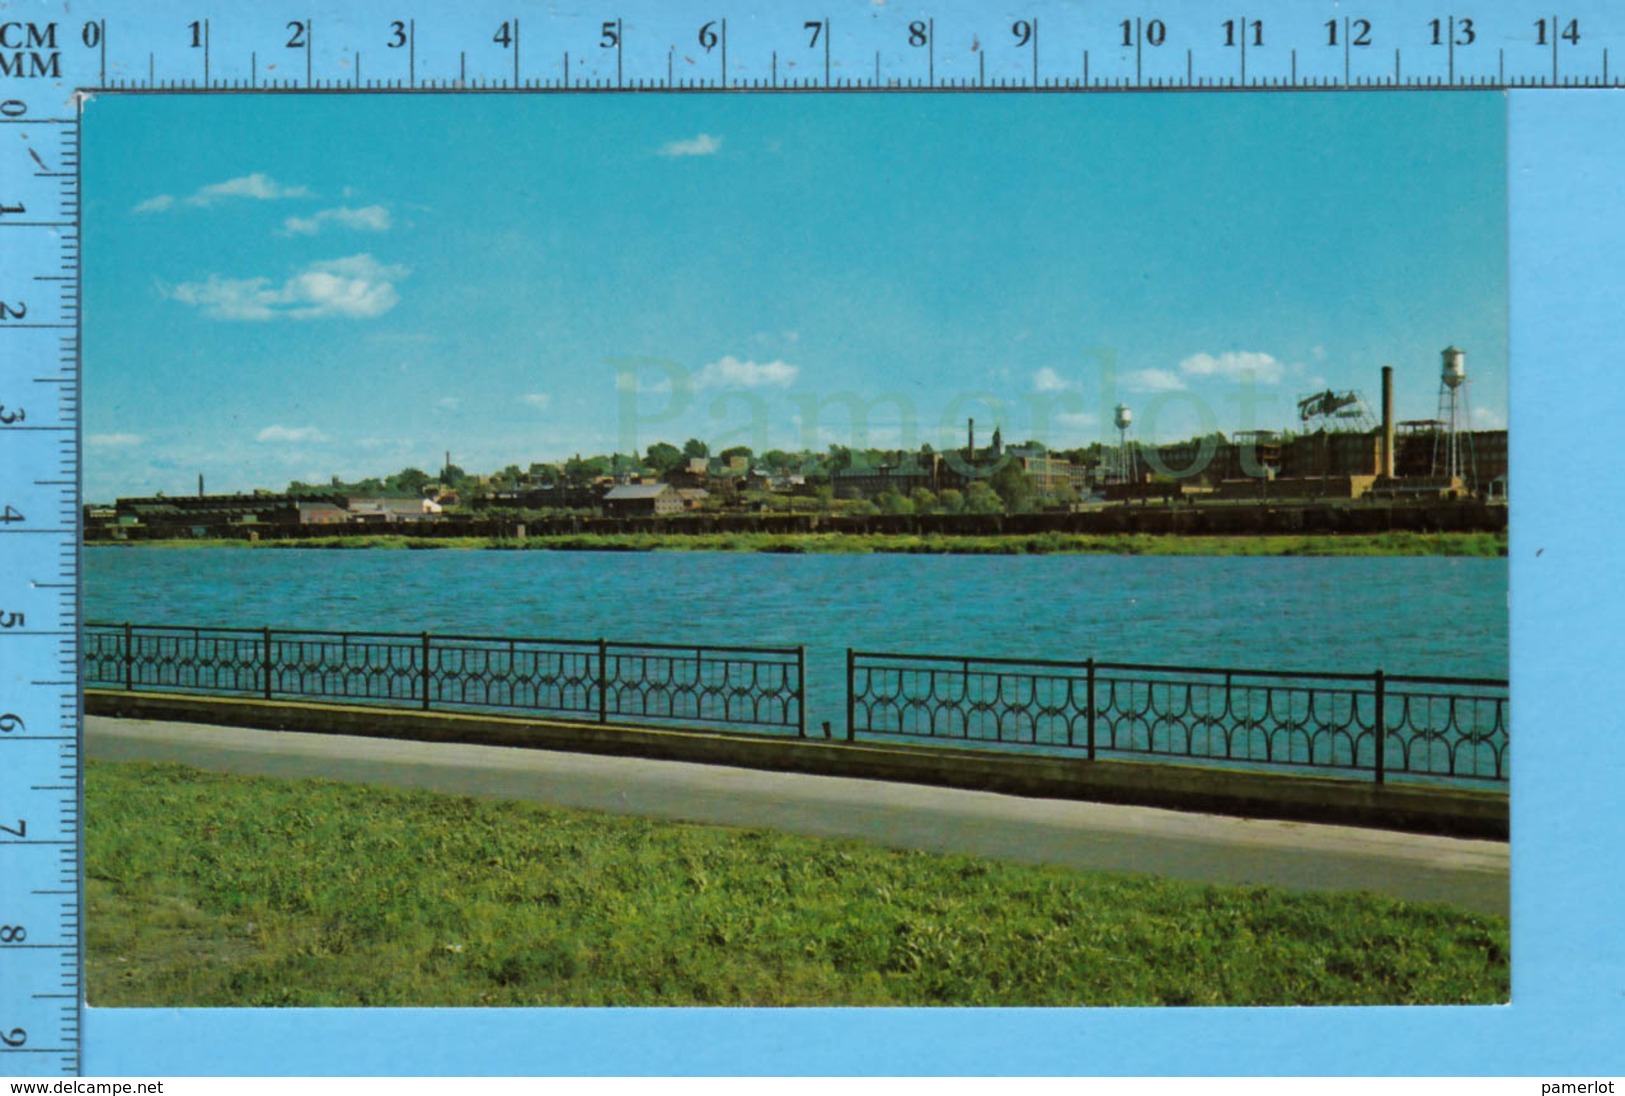 Postcard - Quebec -Sherbrooke Riviere Magog Et Cartier Industriel- Canada - Sherbrooke